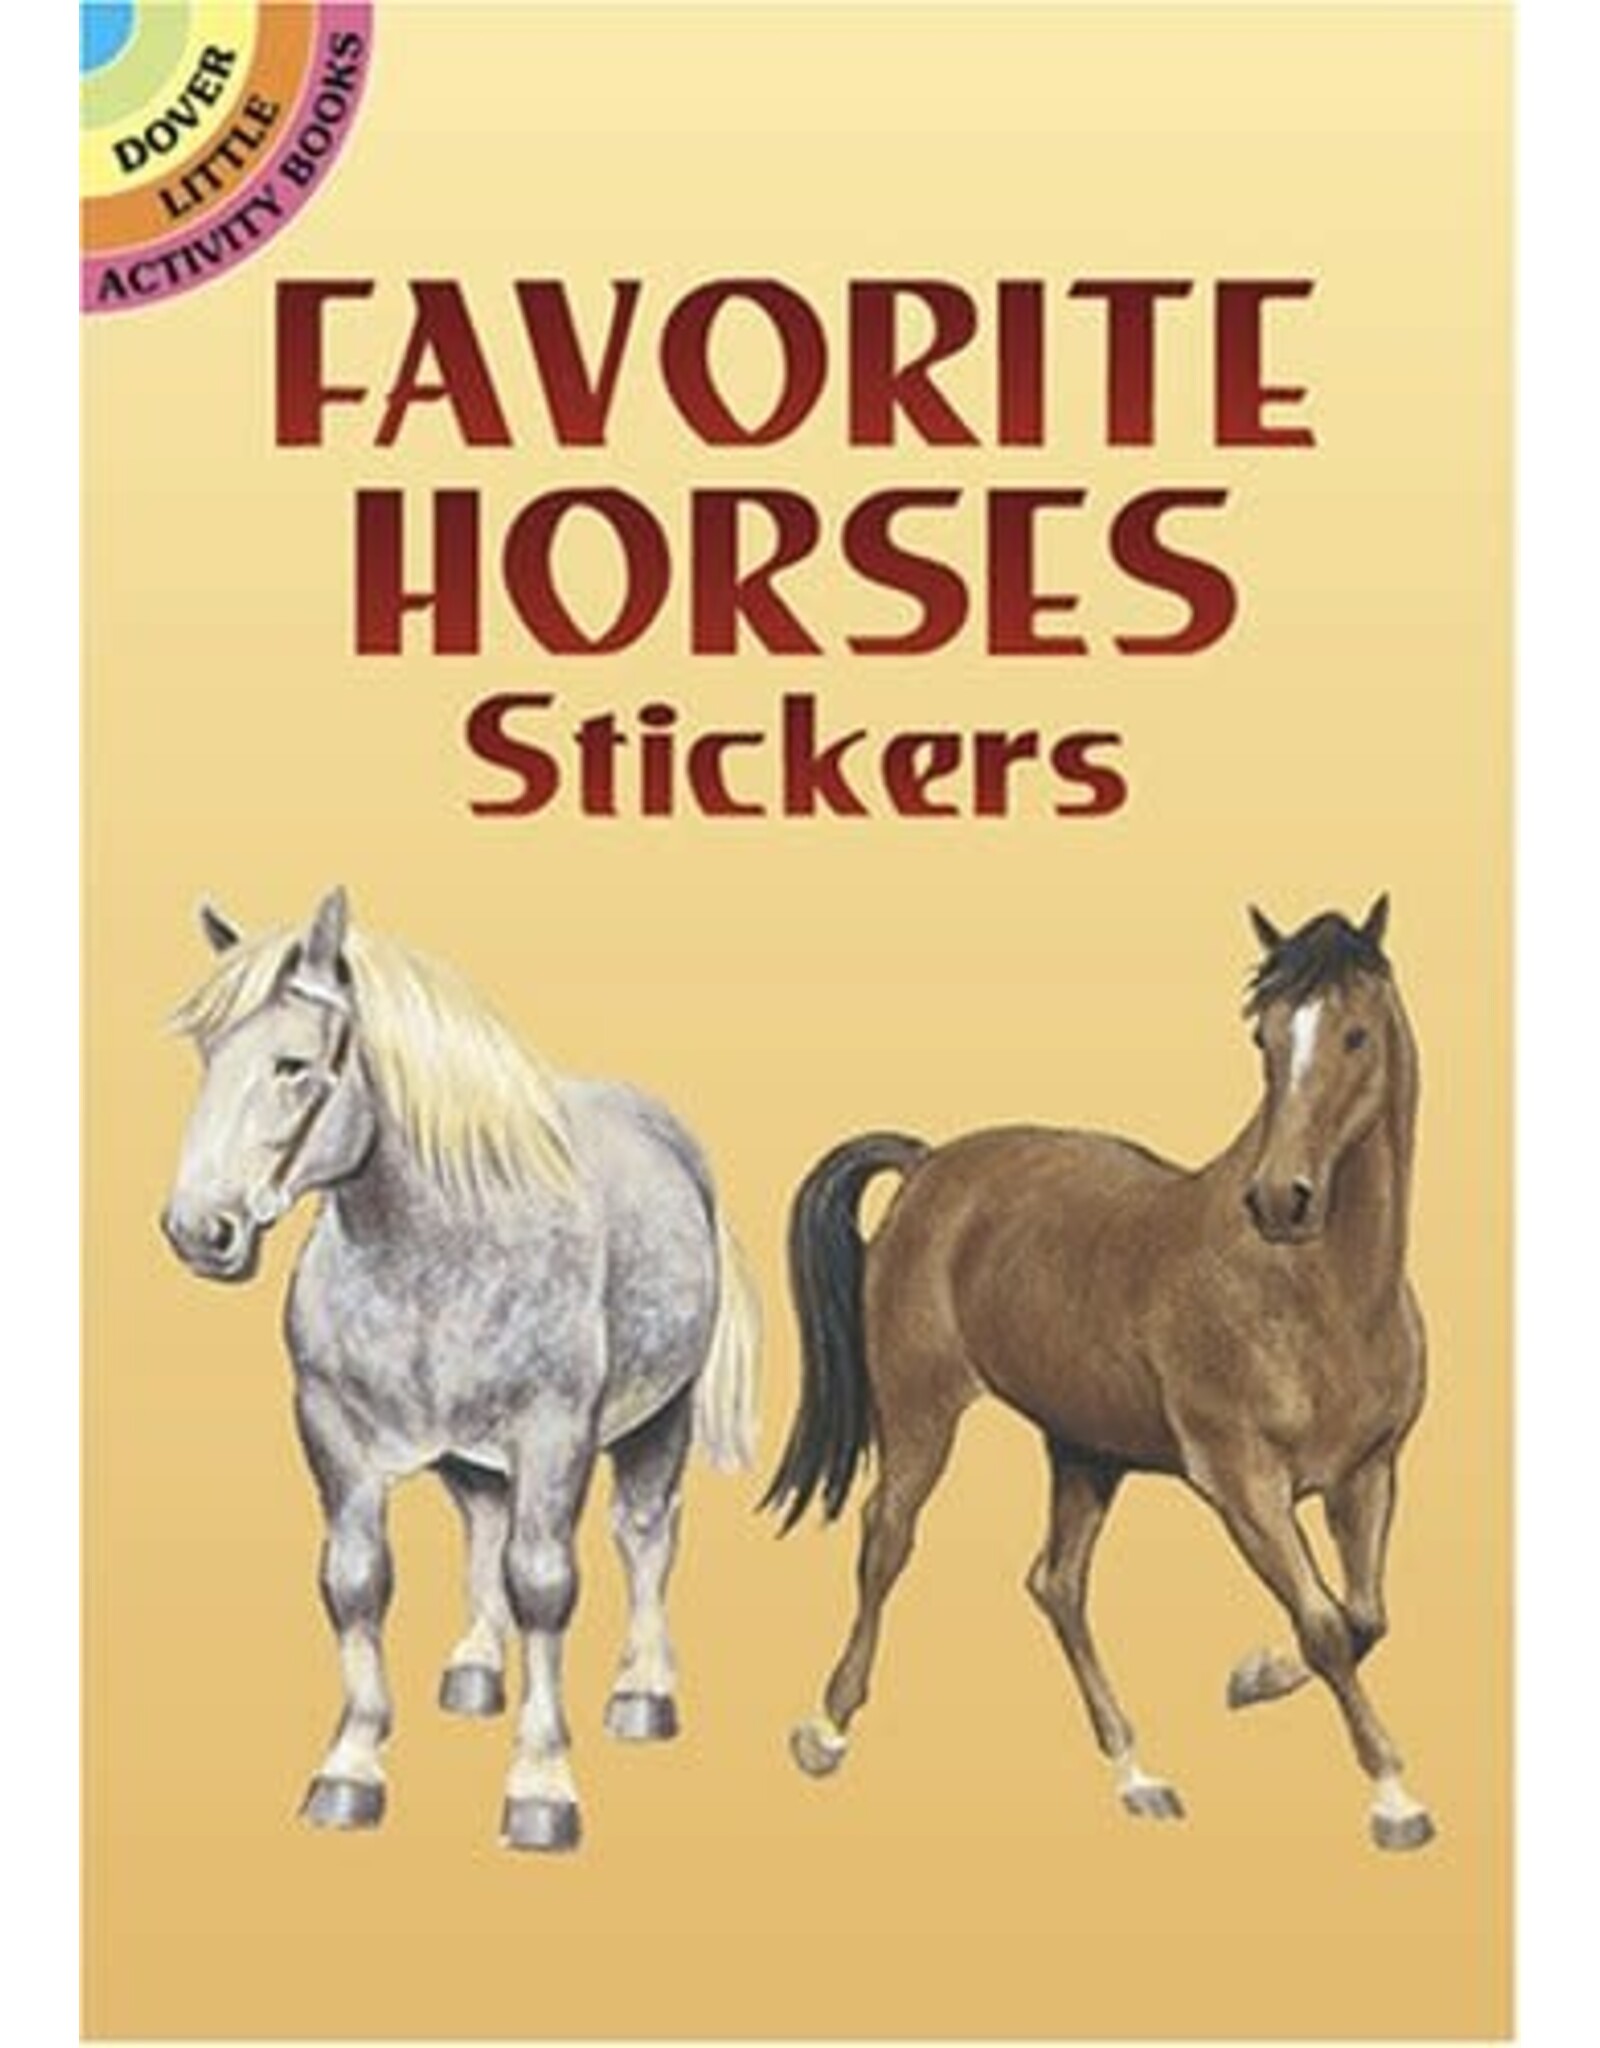 Dover Publications Favorite Horses Stickers